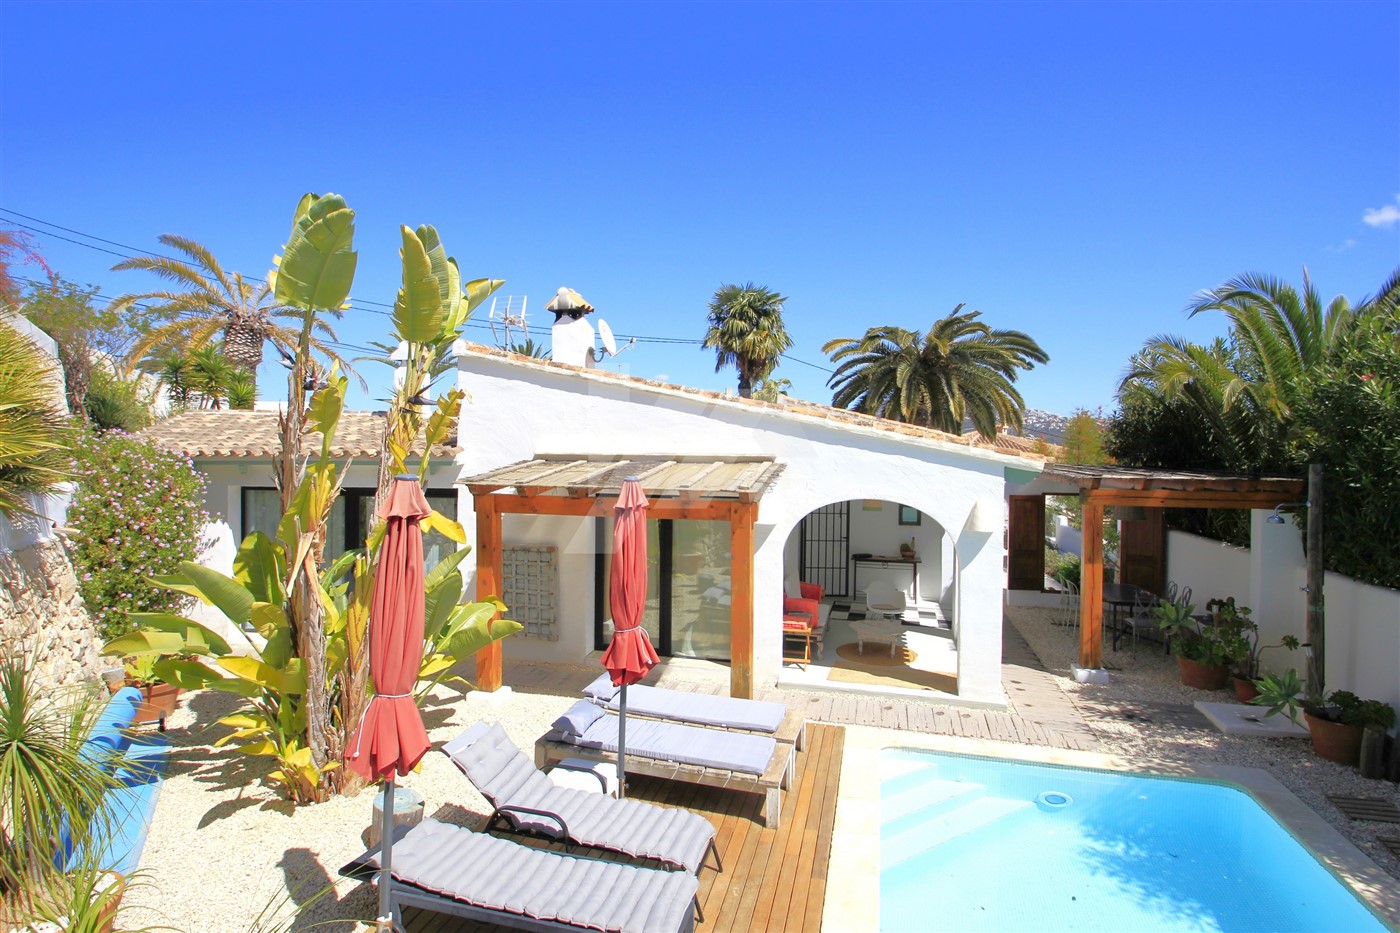 Villa de style Ibizan à vendre à Moraira, Costa Blanca, Espagne.